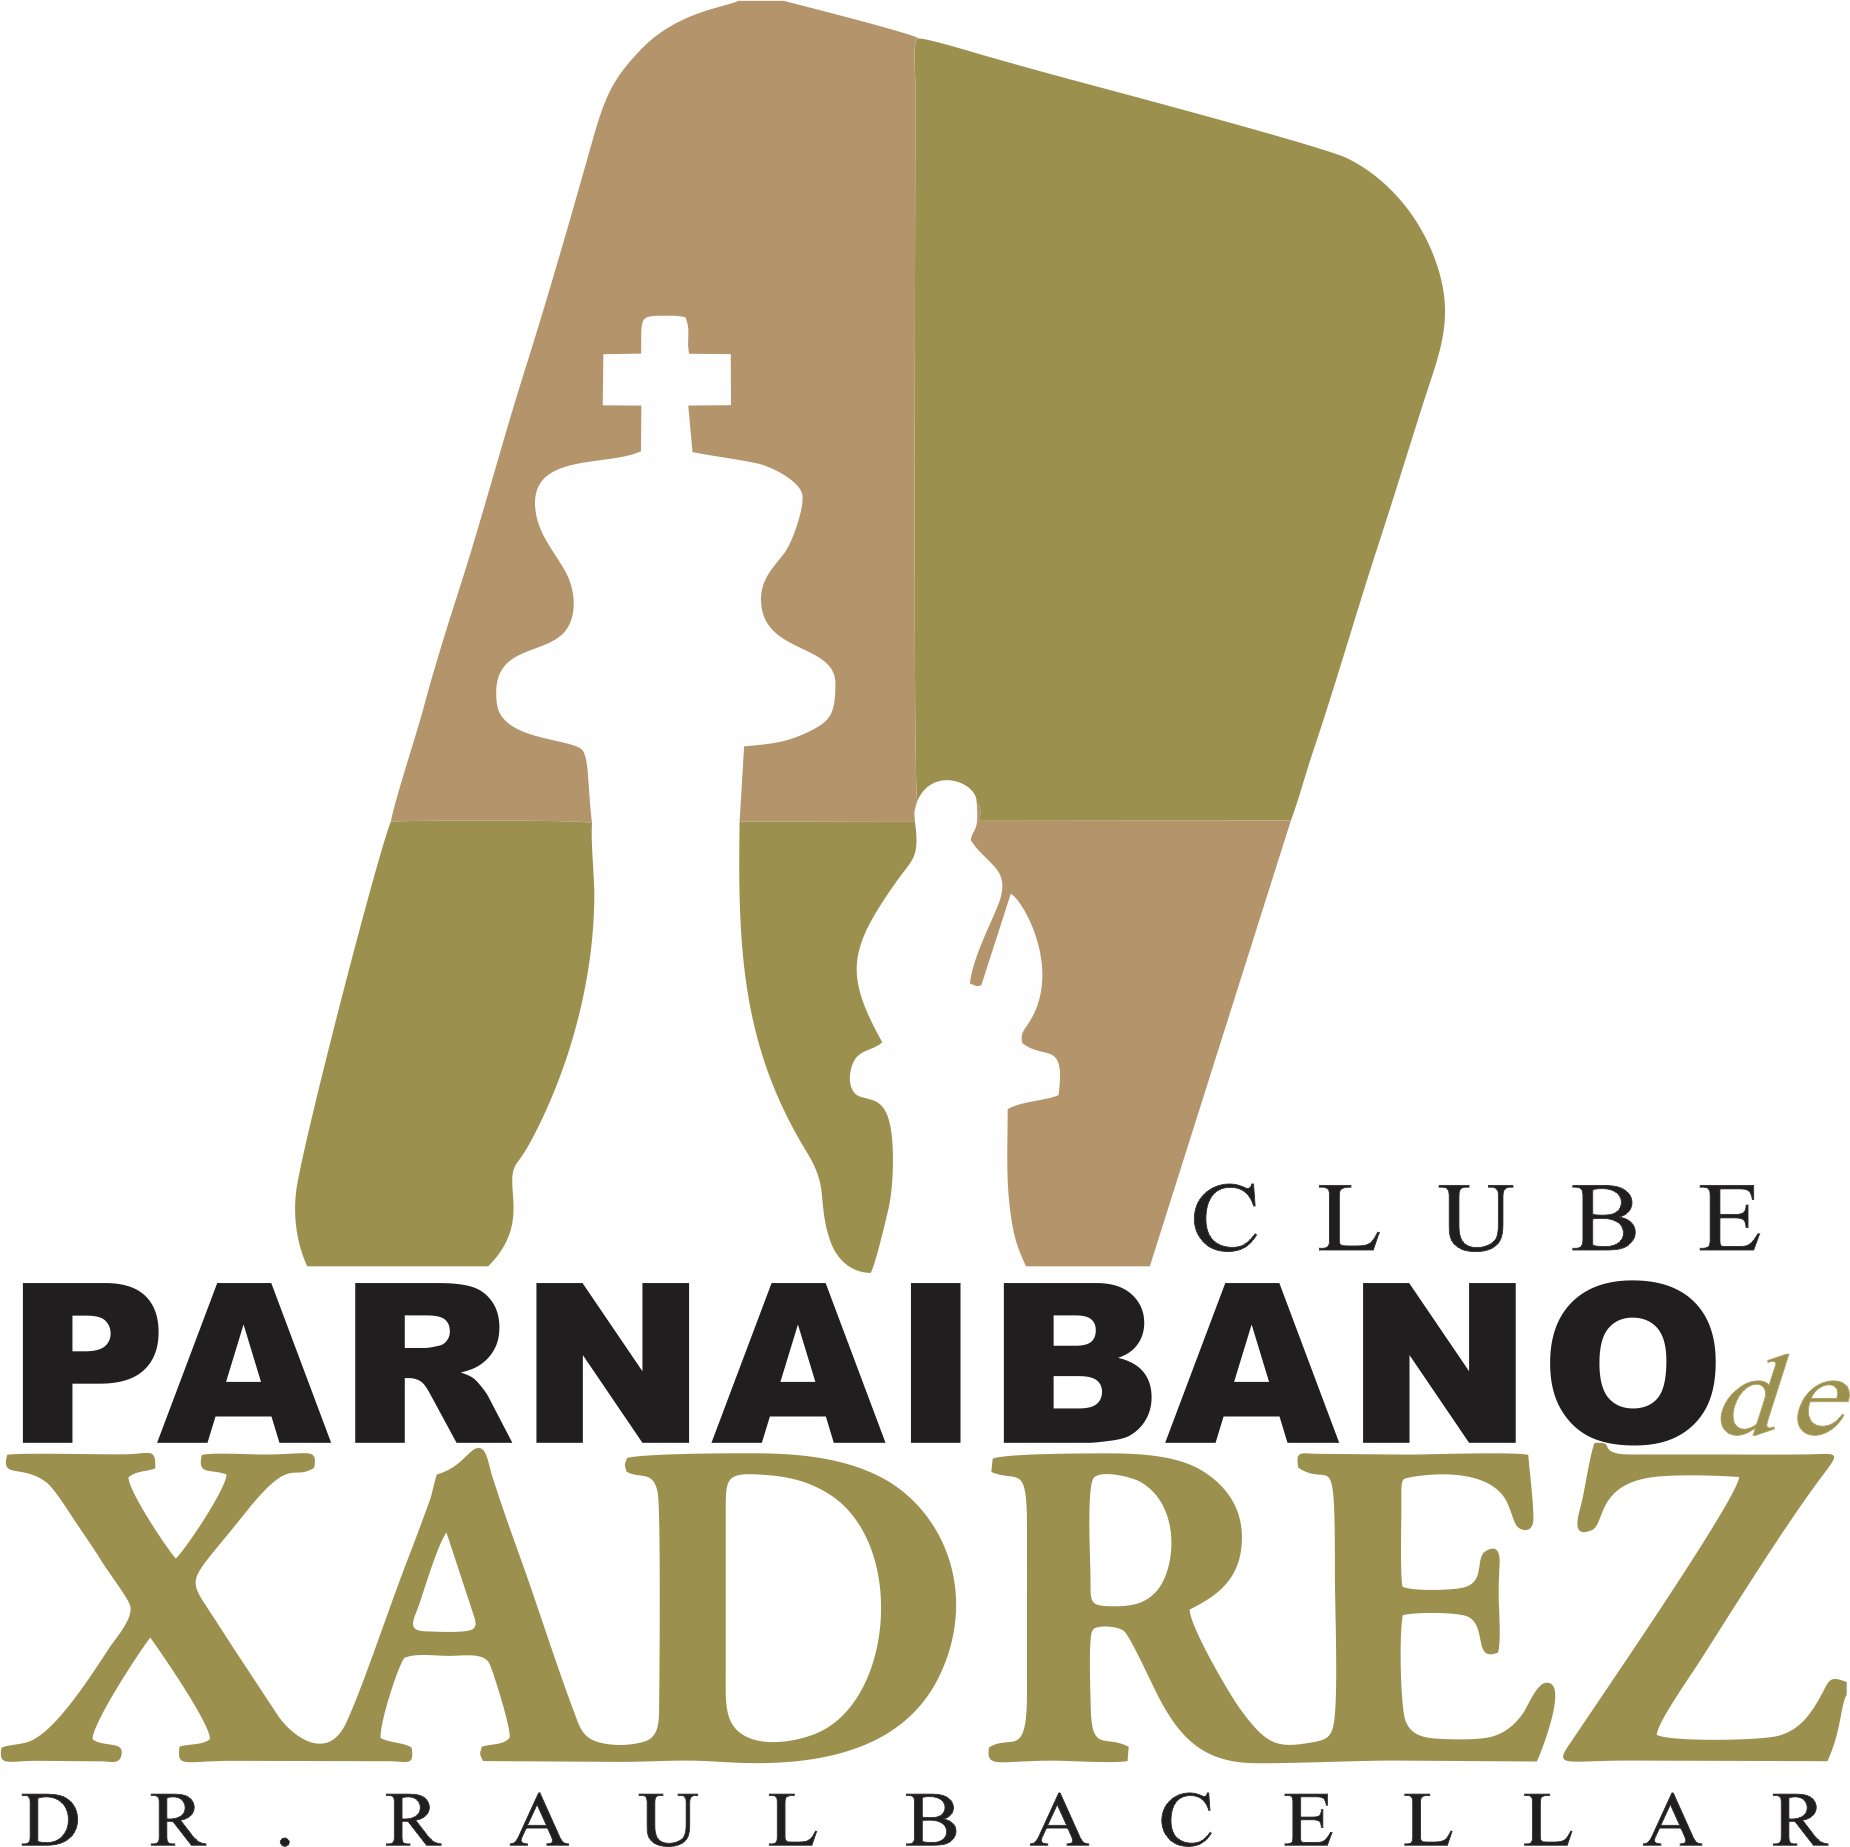 Taça Teresina  Federação Piauiense de Xadrez